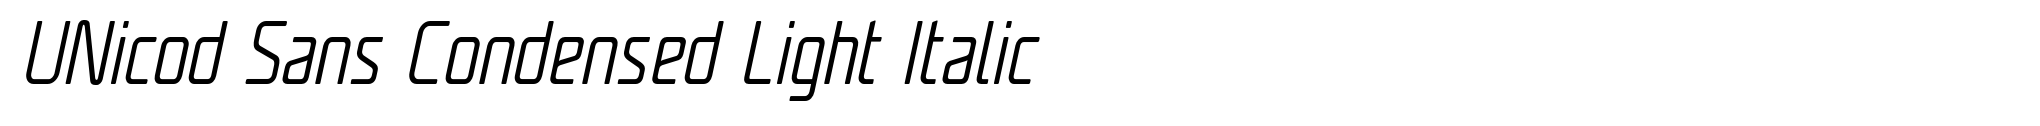 UNicod Sans Condensed Light Italic image